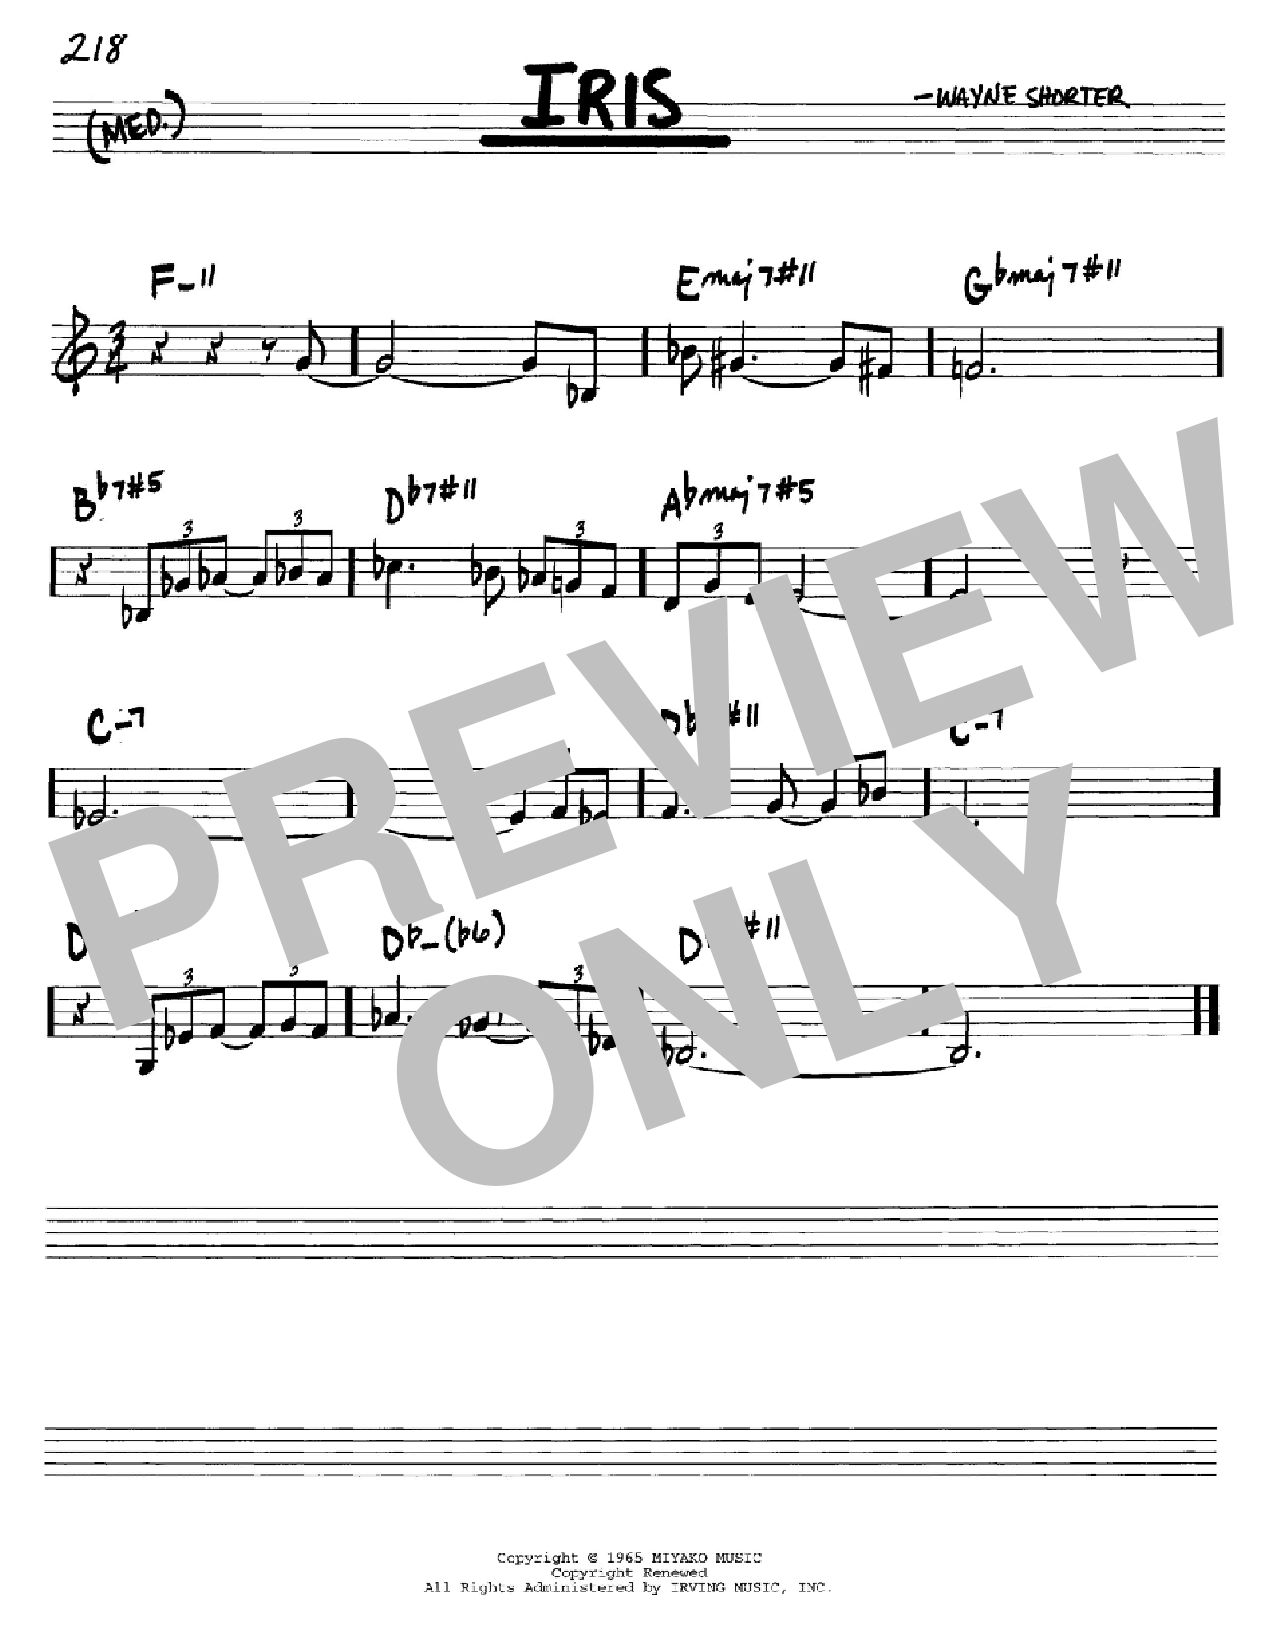 Wayne Shorter Iris Sheet Music Notes & Chords for Real Book - Melody & Chords - C Instruments - Download or Print PDF